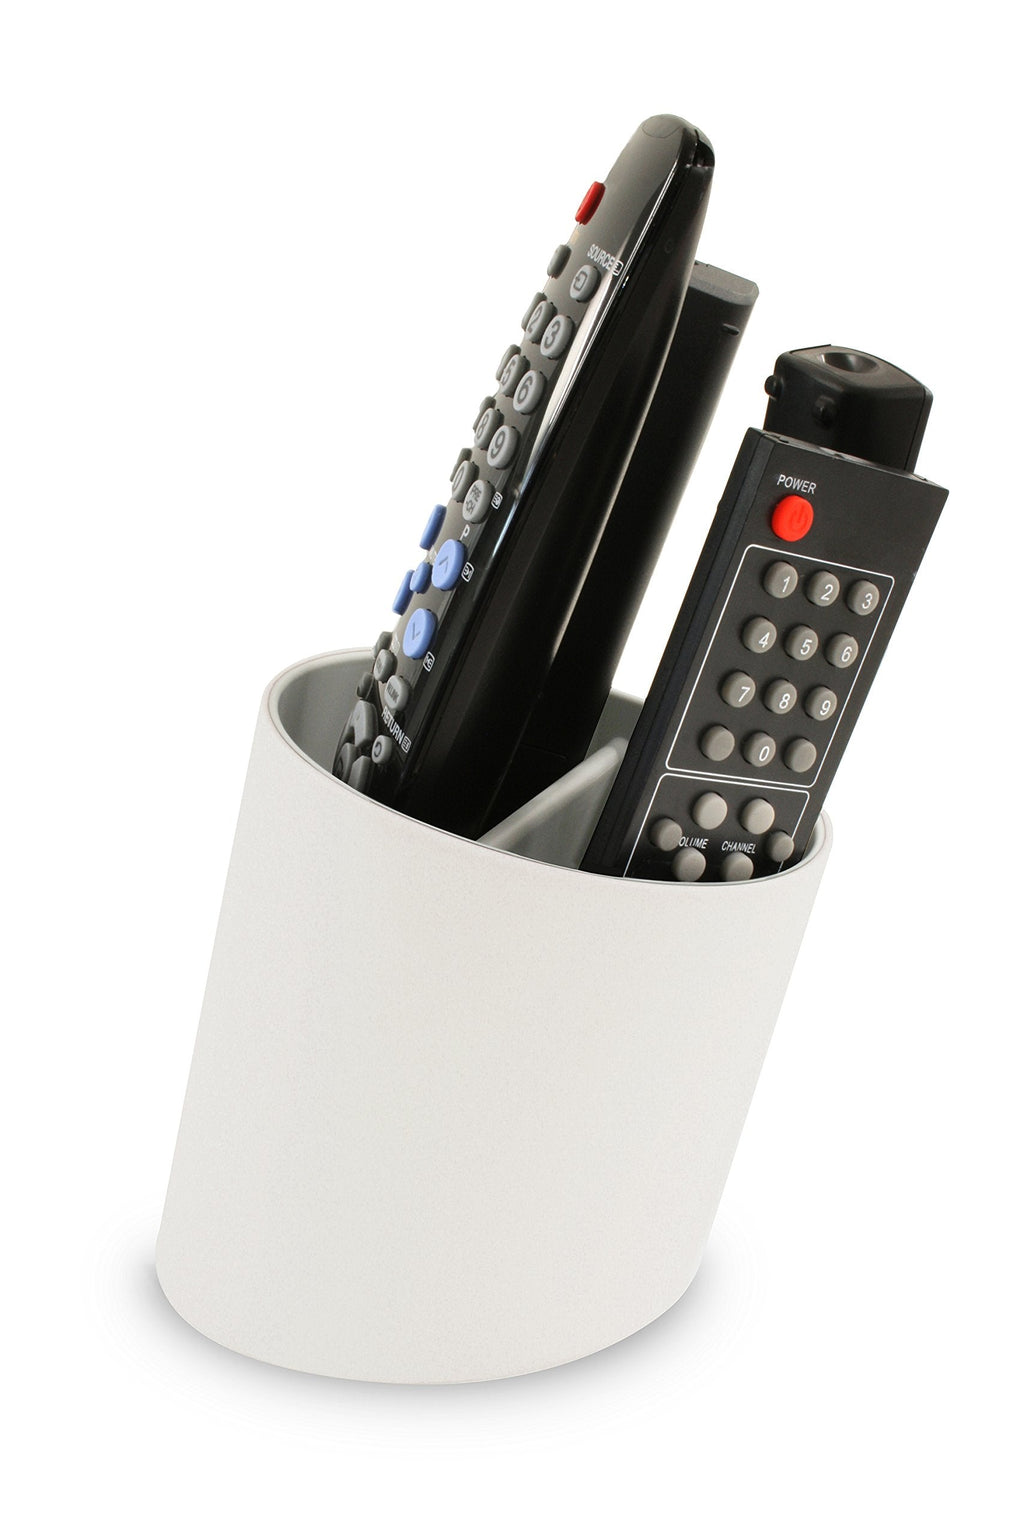  [AUSTRALIA] - j-me Remote Control Holder | TV Remote Holder | Media Storage Caddy | Remote Organizer | Caddy Organizer for up to 4 Remote Controls (White/Gray) White/Gray